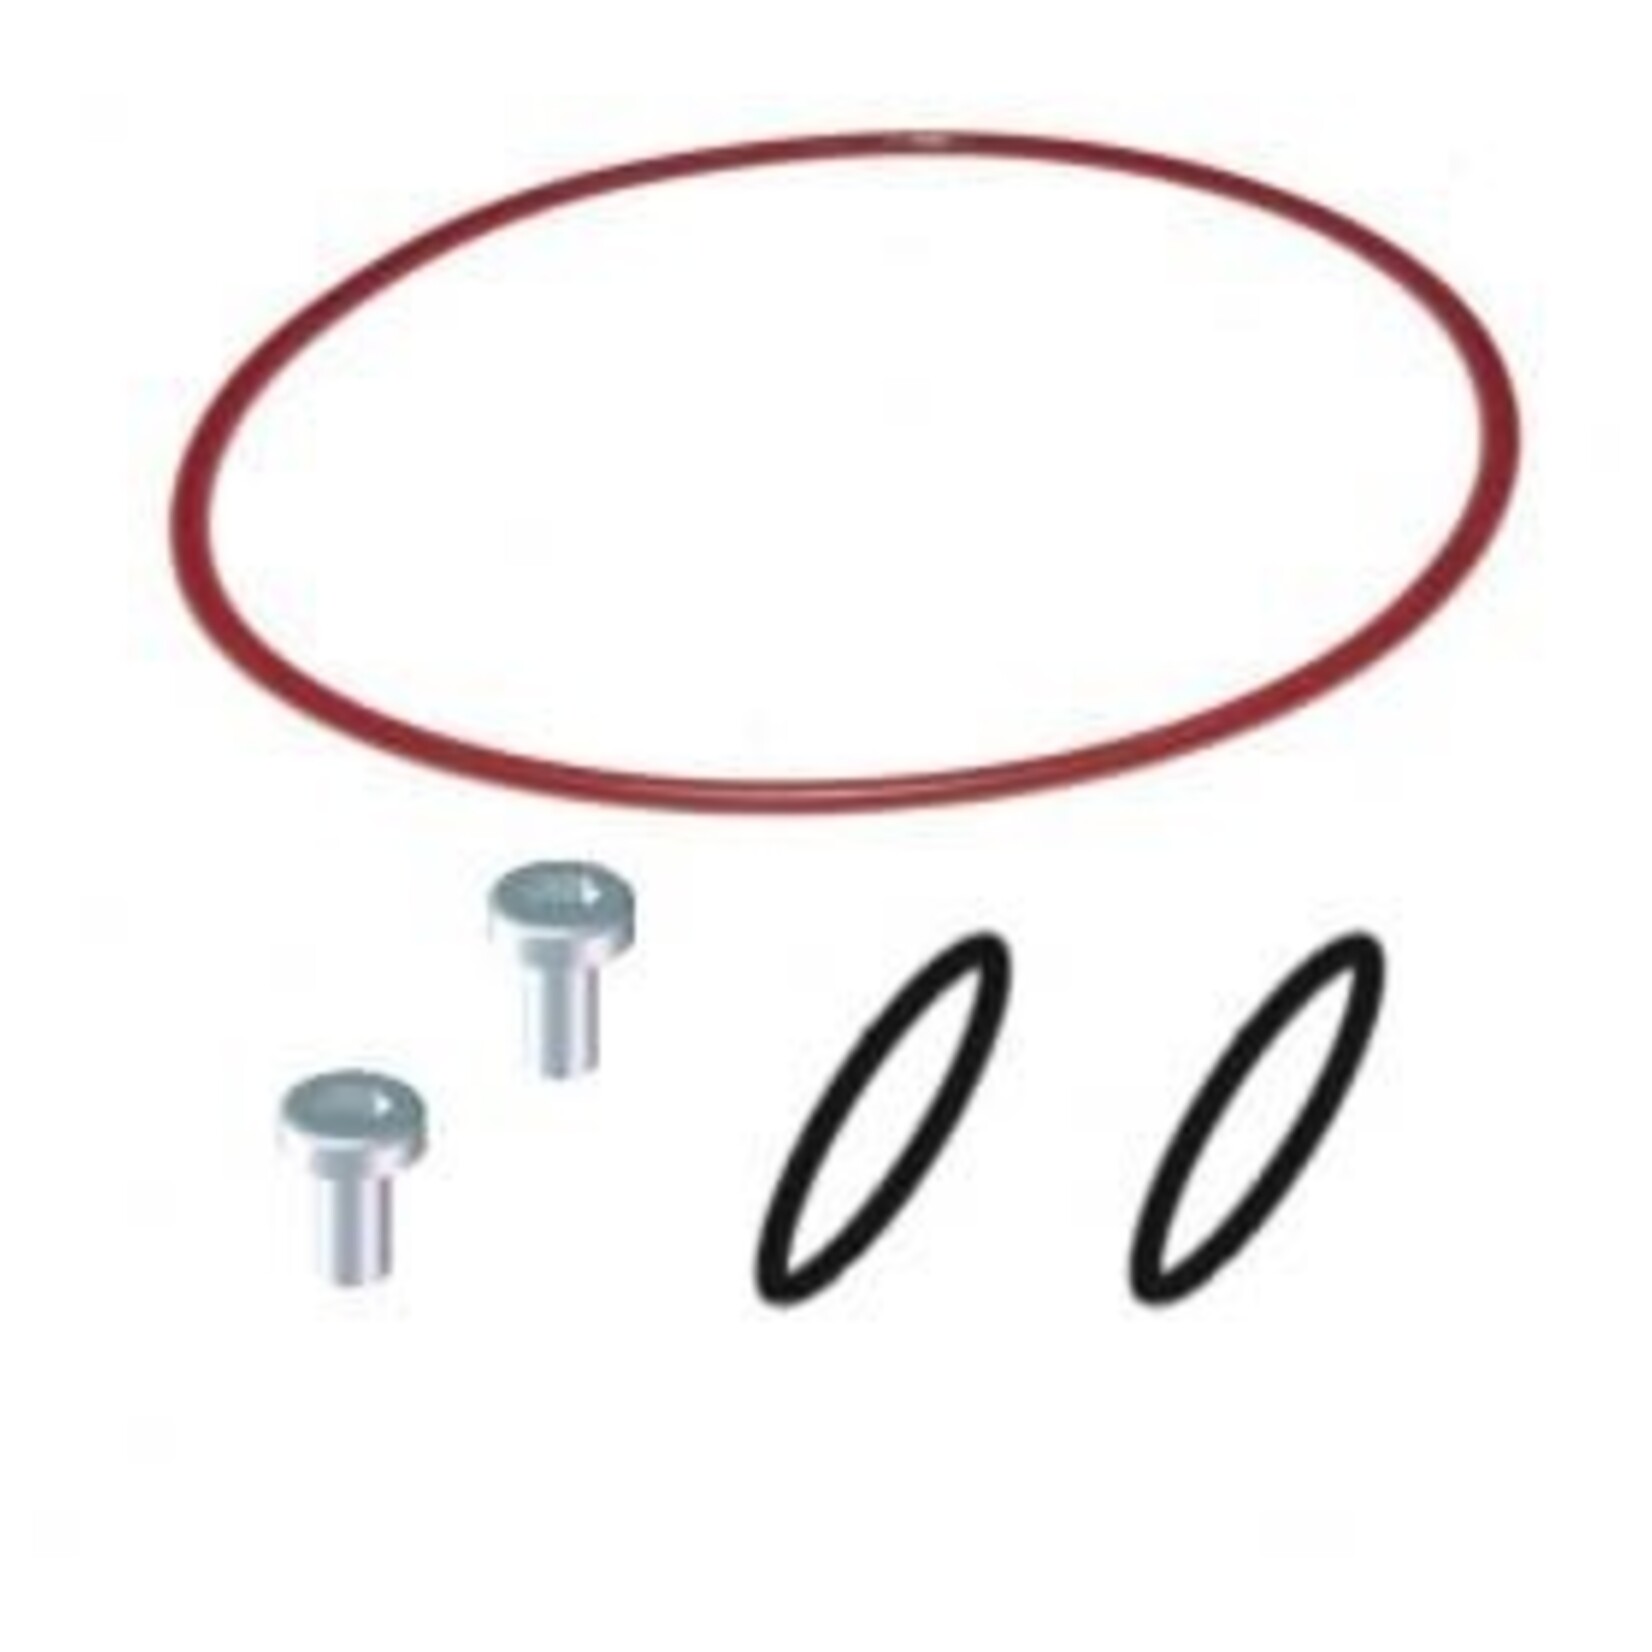 Eheim ring & screws for reeflex uv 3721/3722/3723